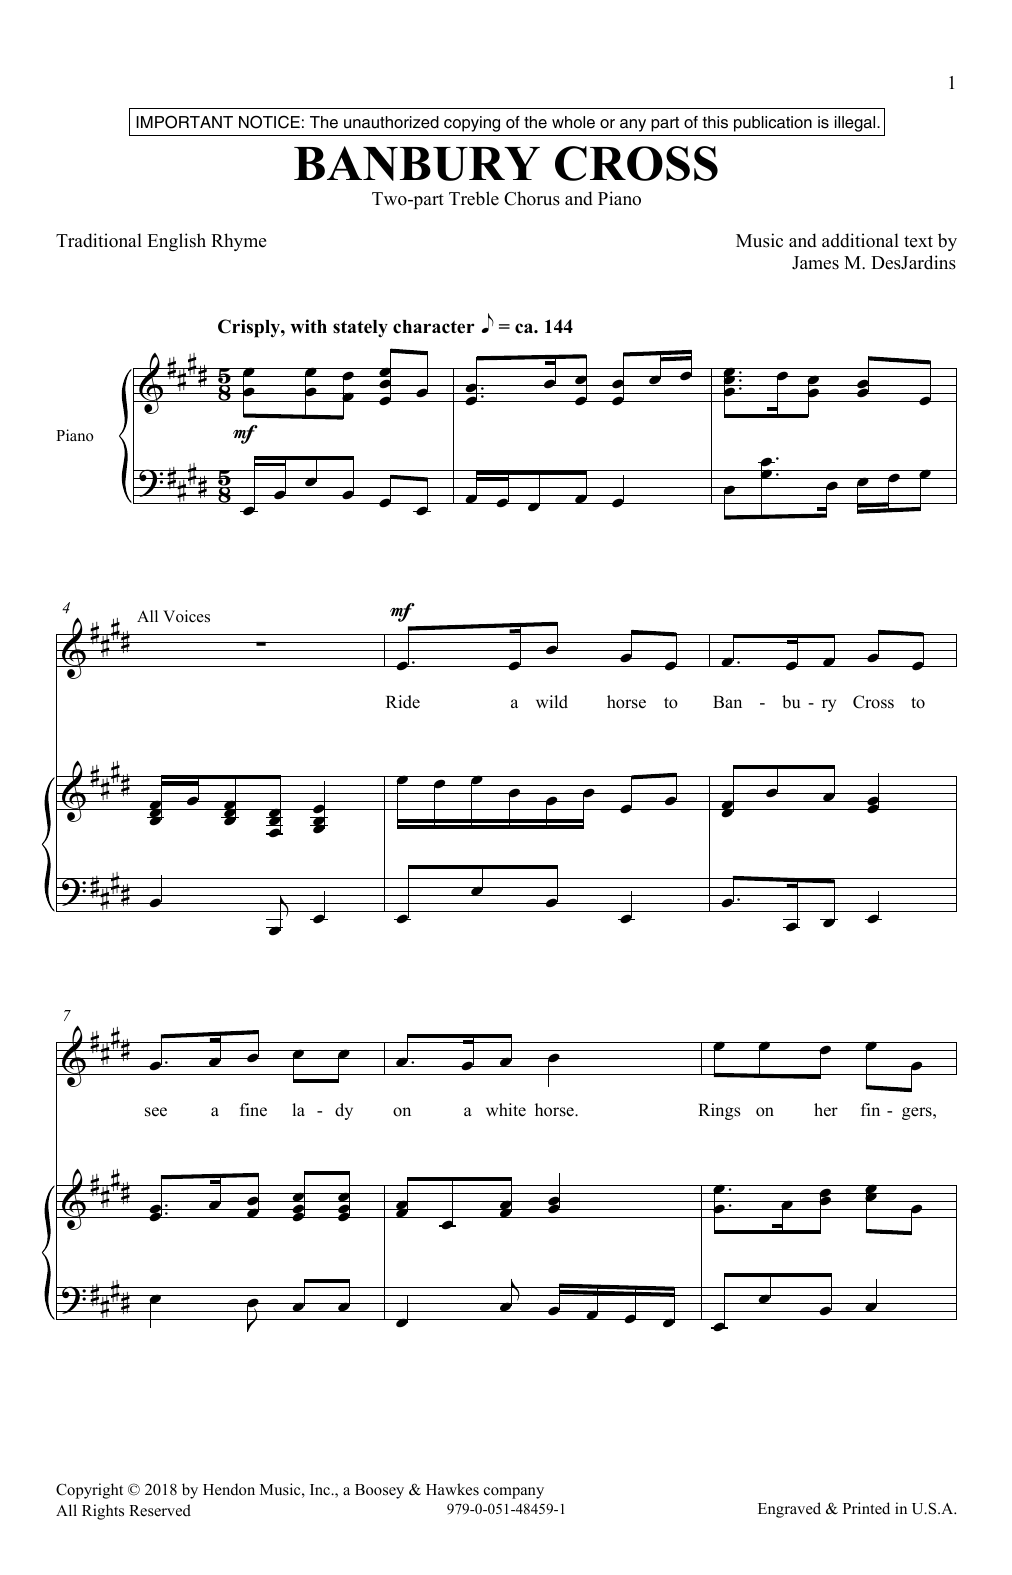 James M. DesJardins Banbury Cross Sheet Music Notes & Chords for 2-Part Choir - Download or Print PDF